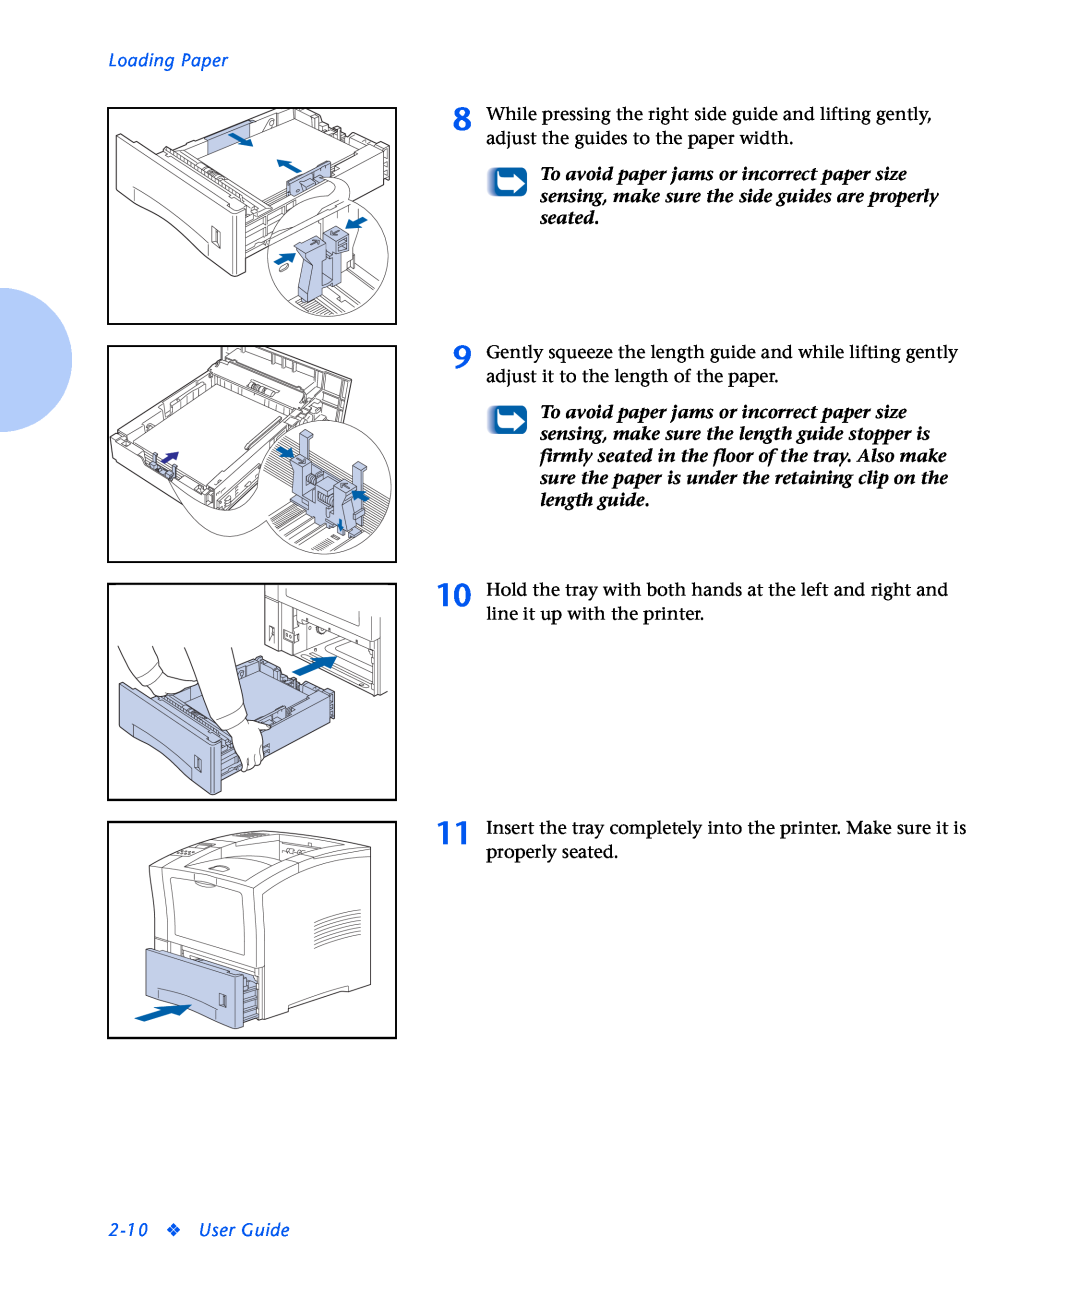 Xerox N2125 manual Loading Paper, User Guide 